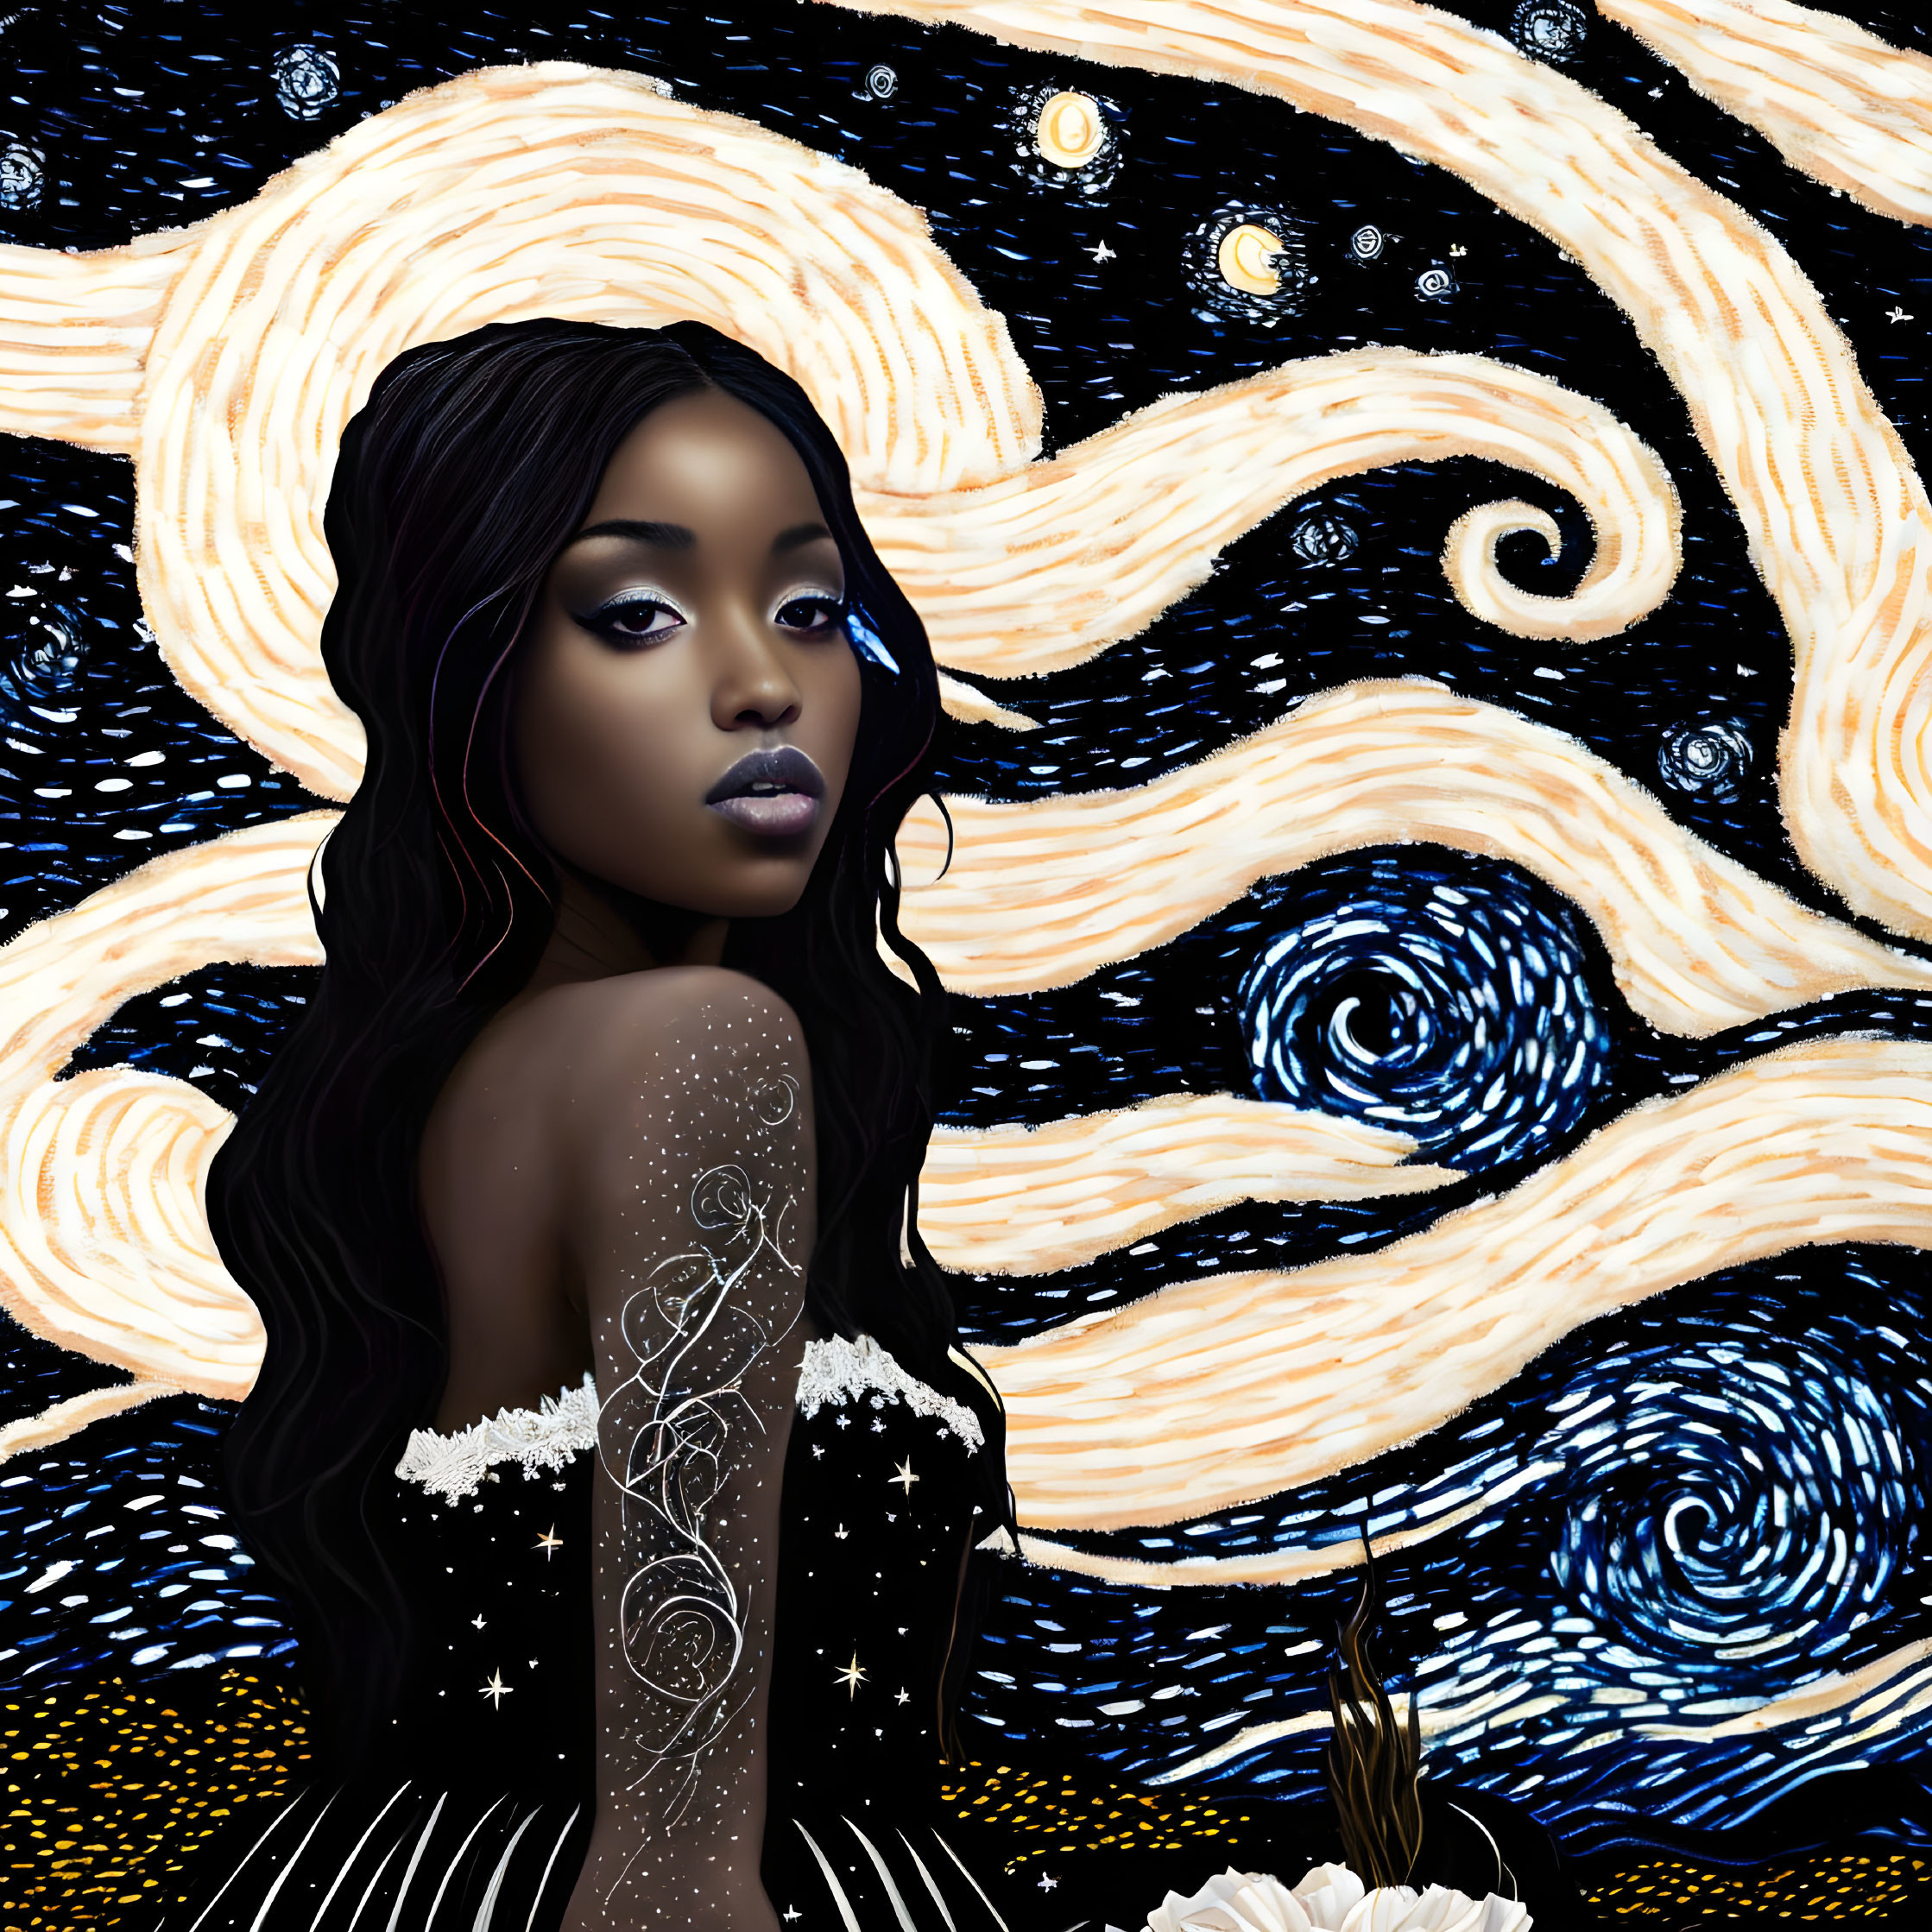 Goddess full of radiance in the Starry Night